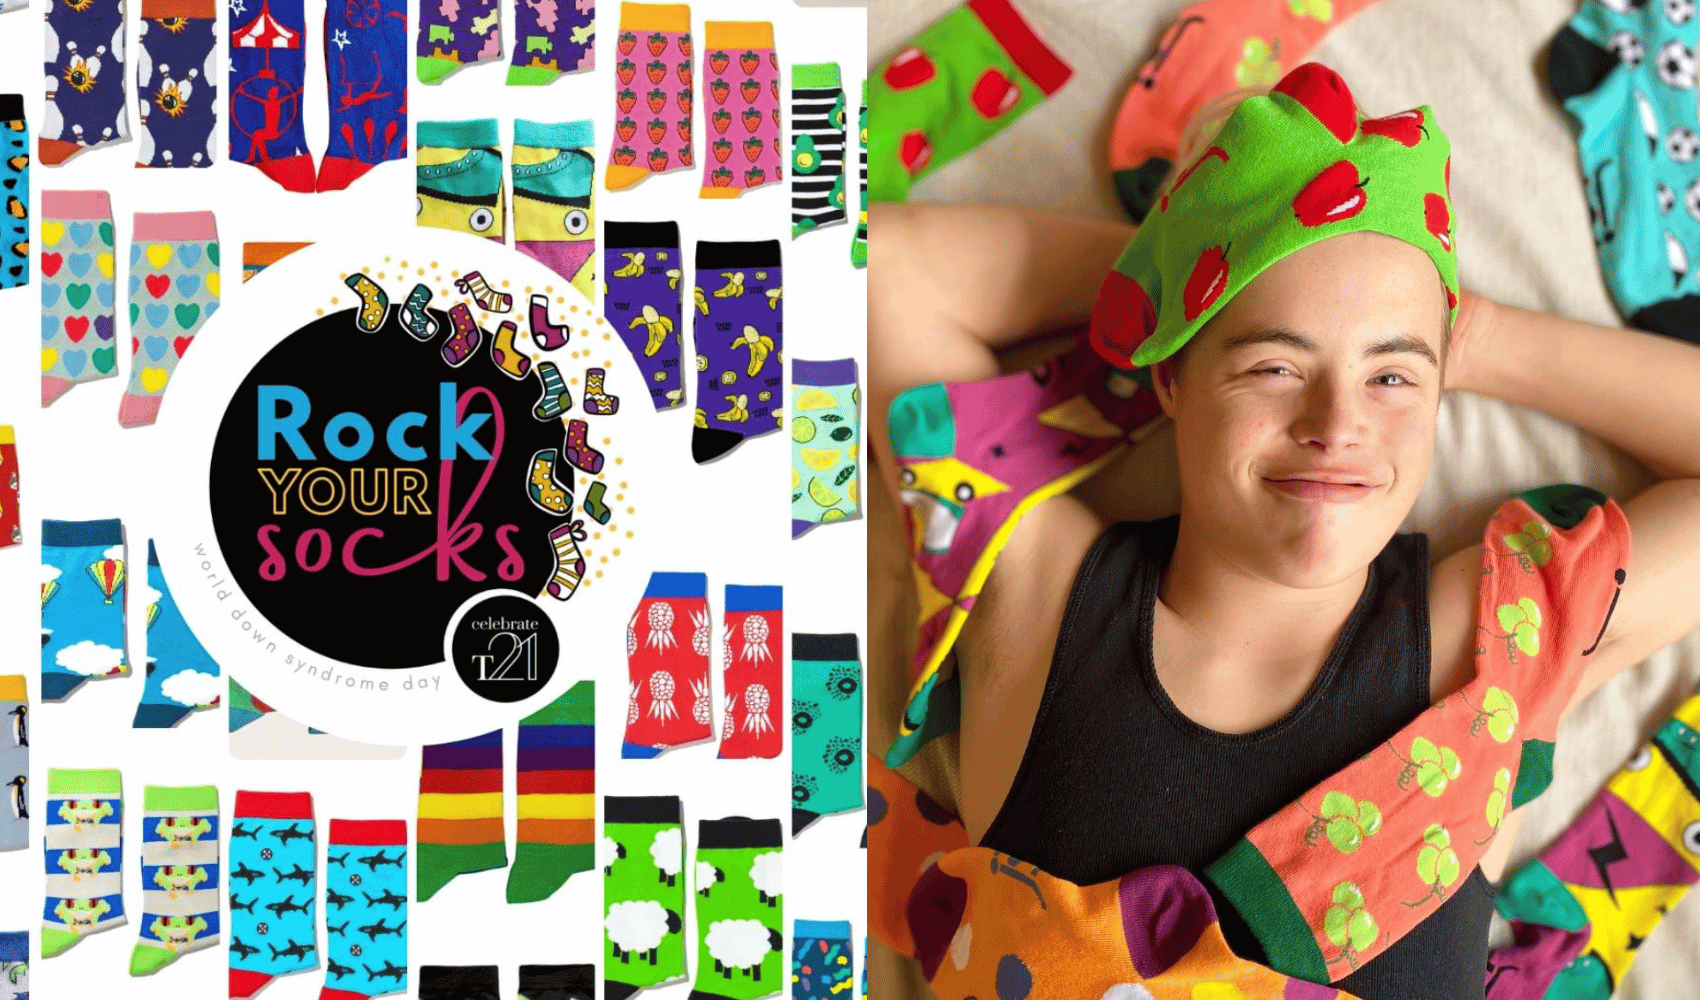 Celebrate T21 image socks with child